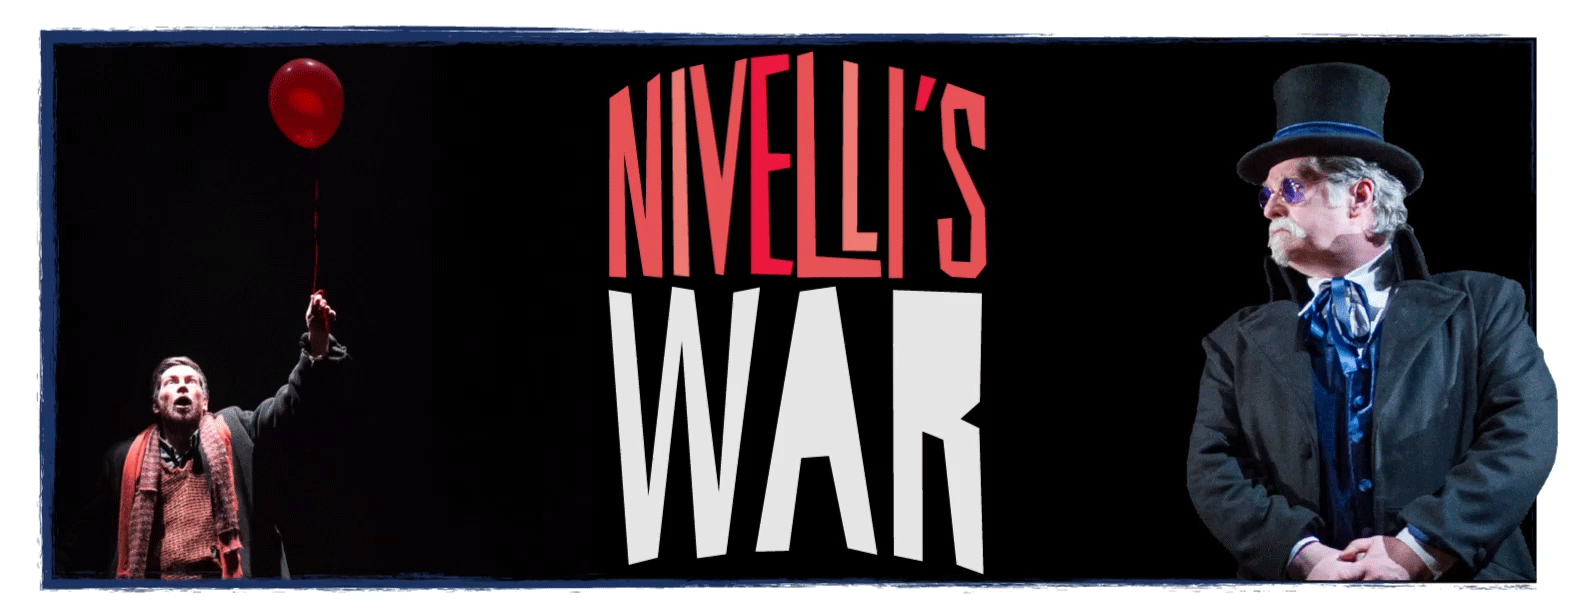 Please Download Images: Nivelli's War